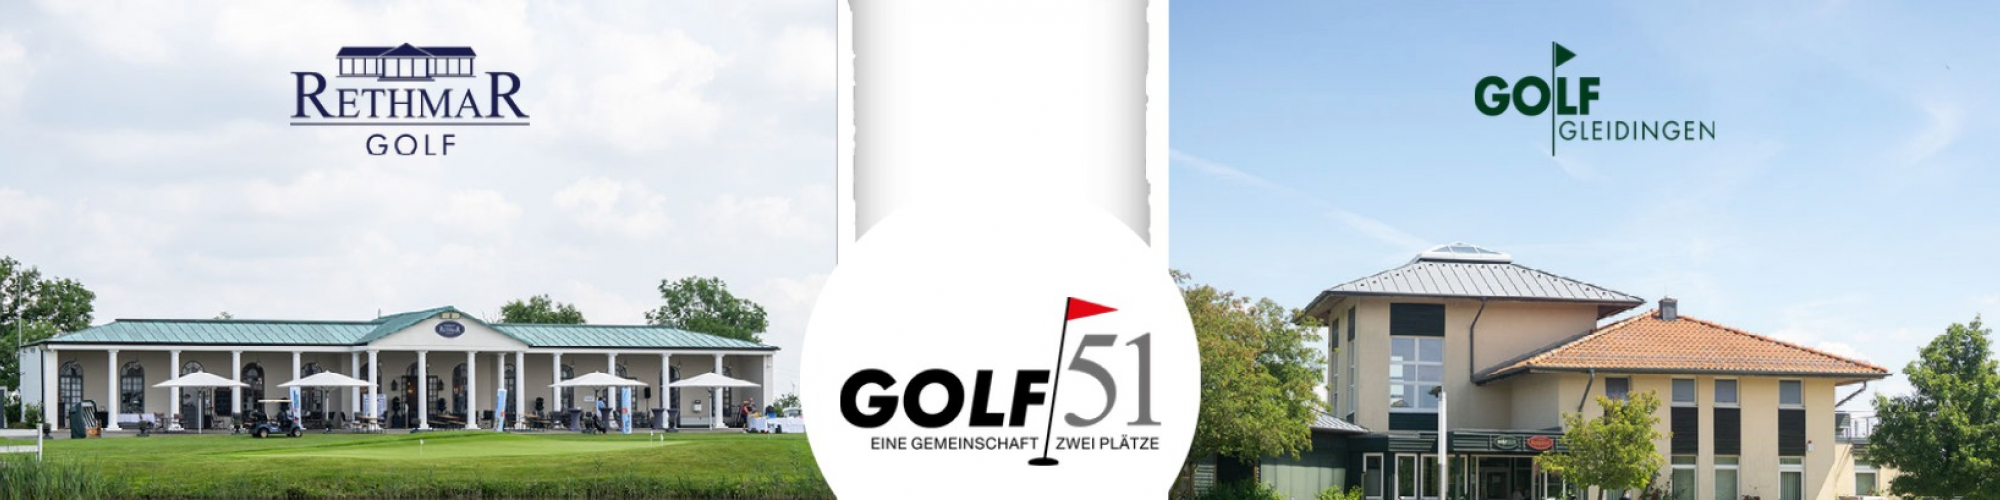 Golf 51